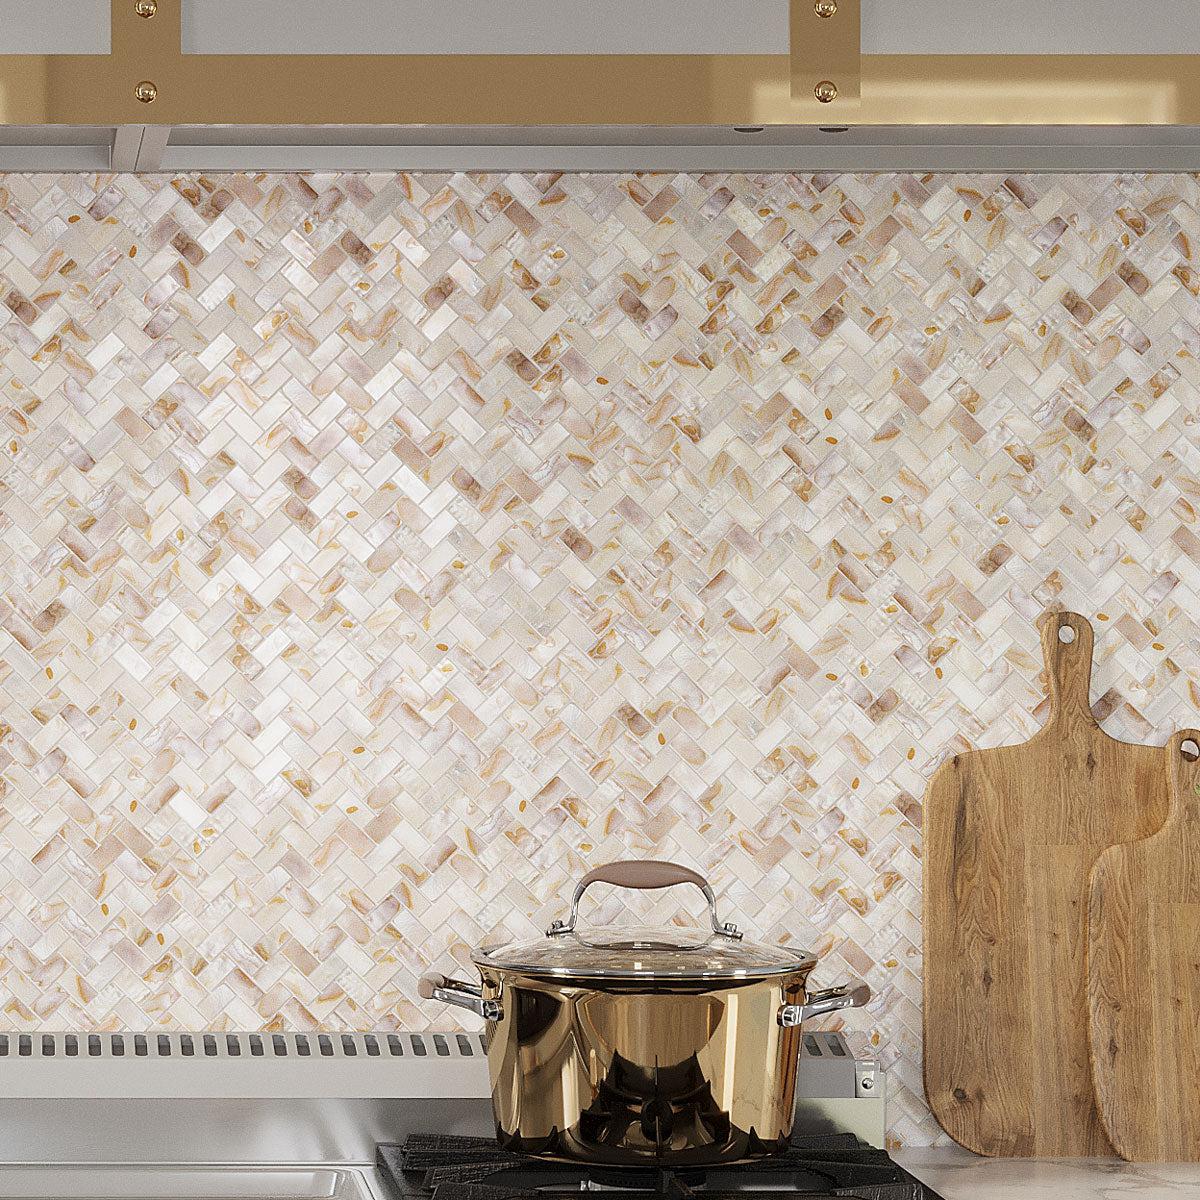 Seashell Dreams Herringbone Mosaic Tile Kitchen Backsplash